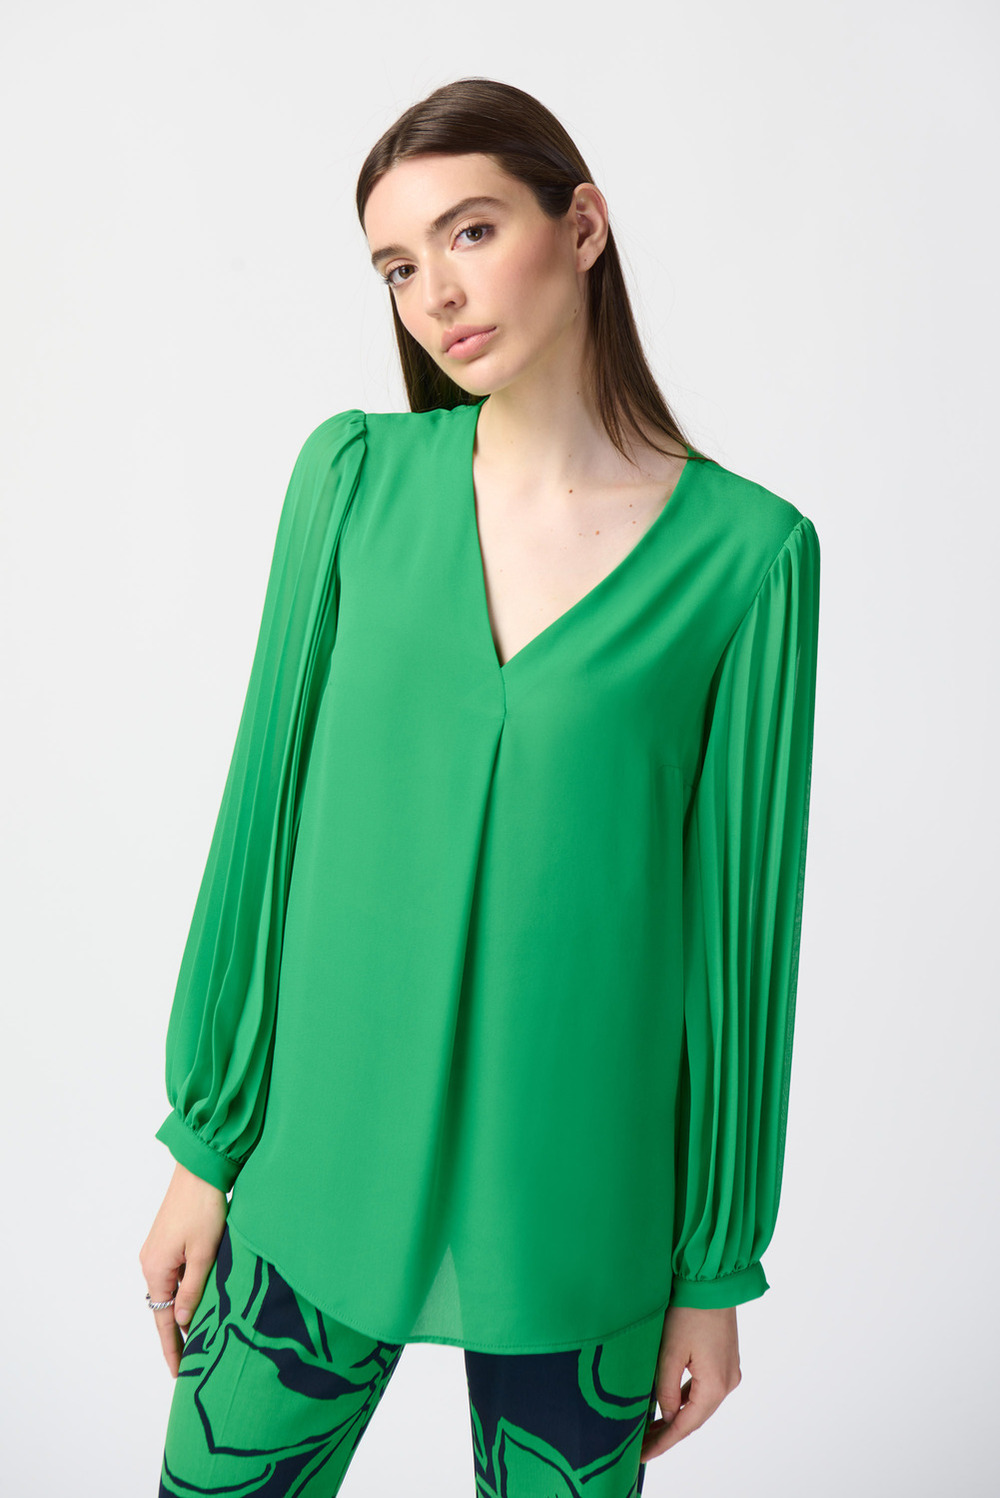 Pleated Sleeve Blouse Style 241173. Island Green